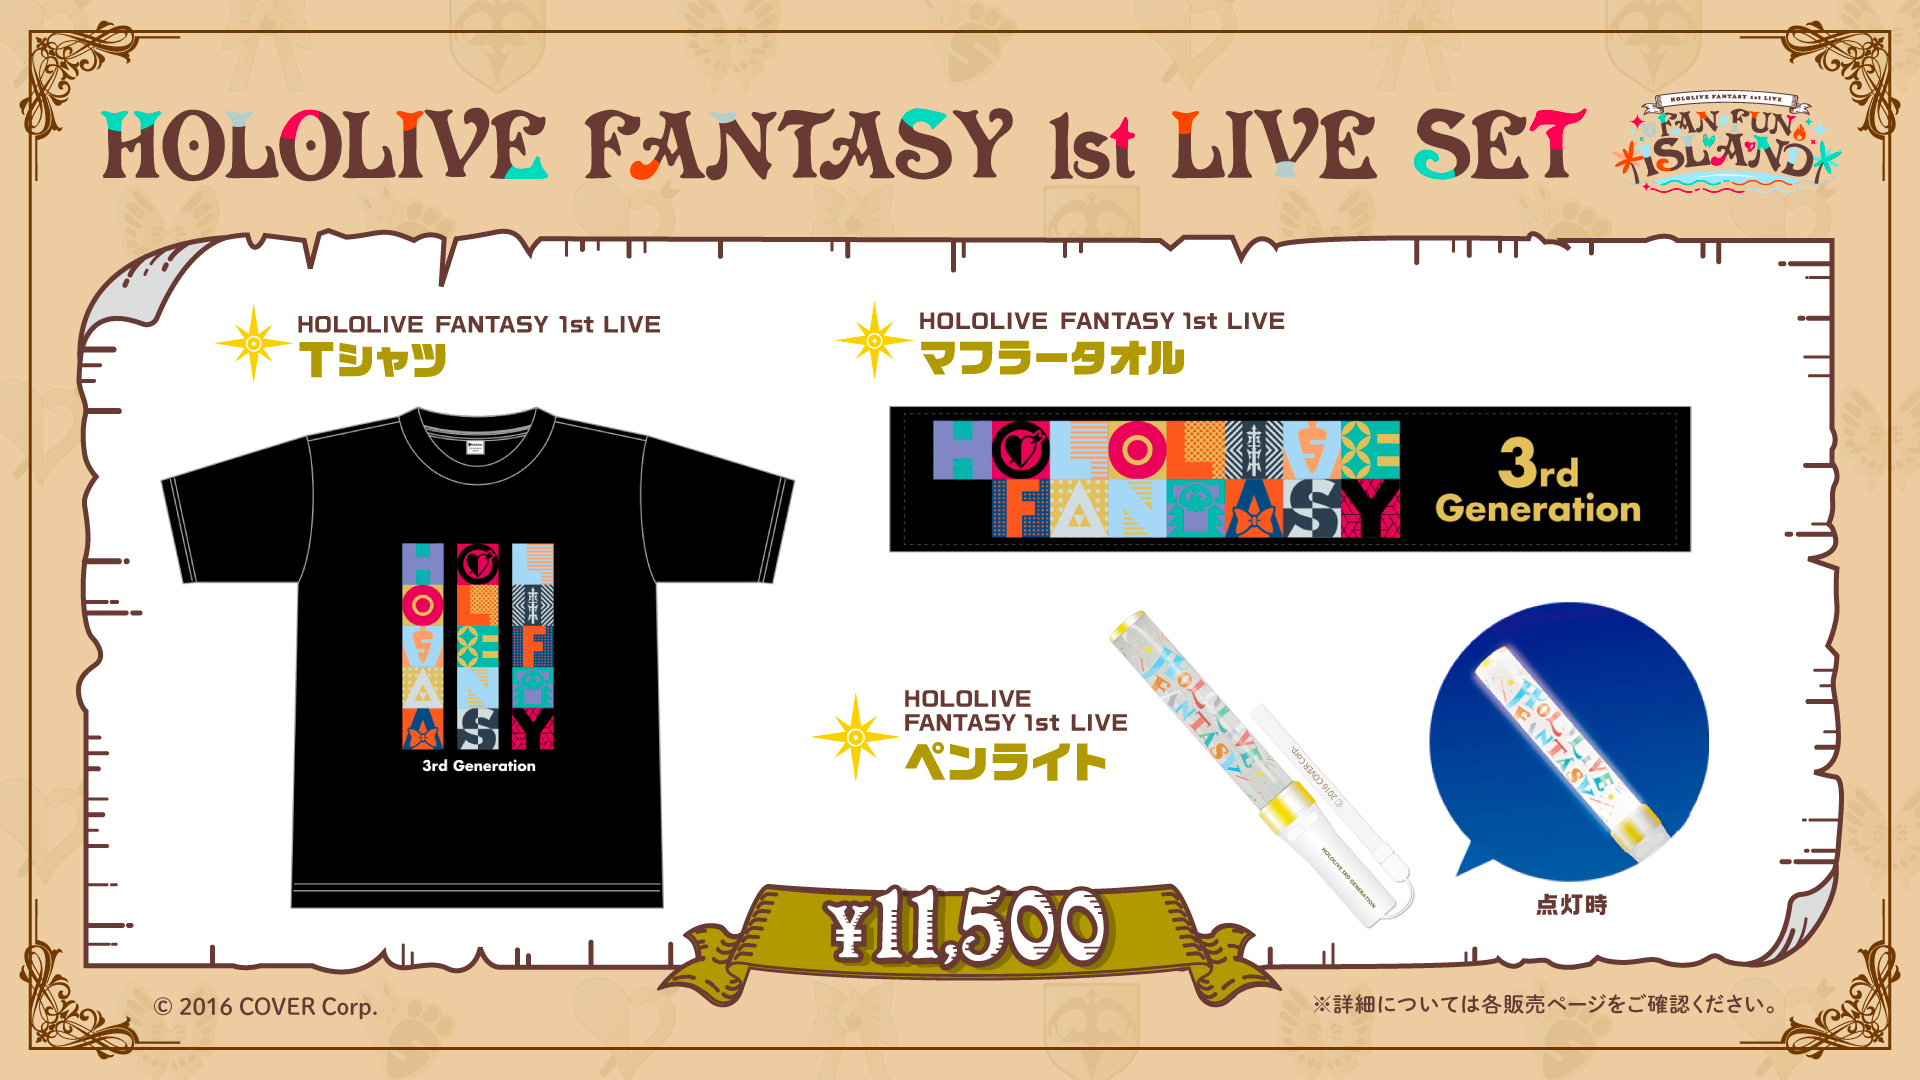 hololive-fantasy-1st-live-fan-fun-island2-2